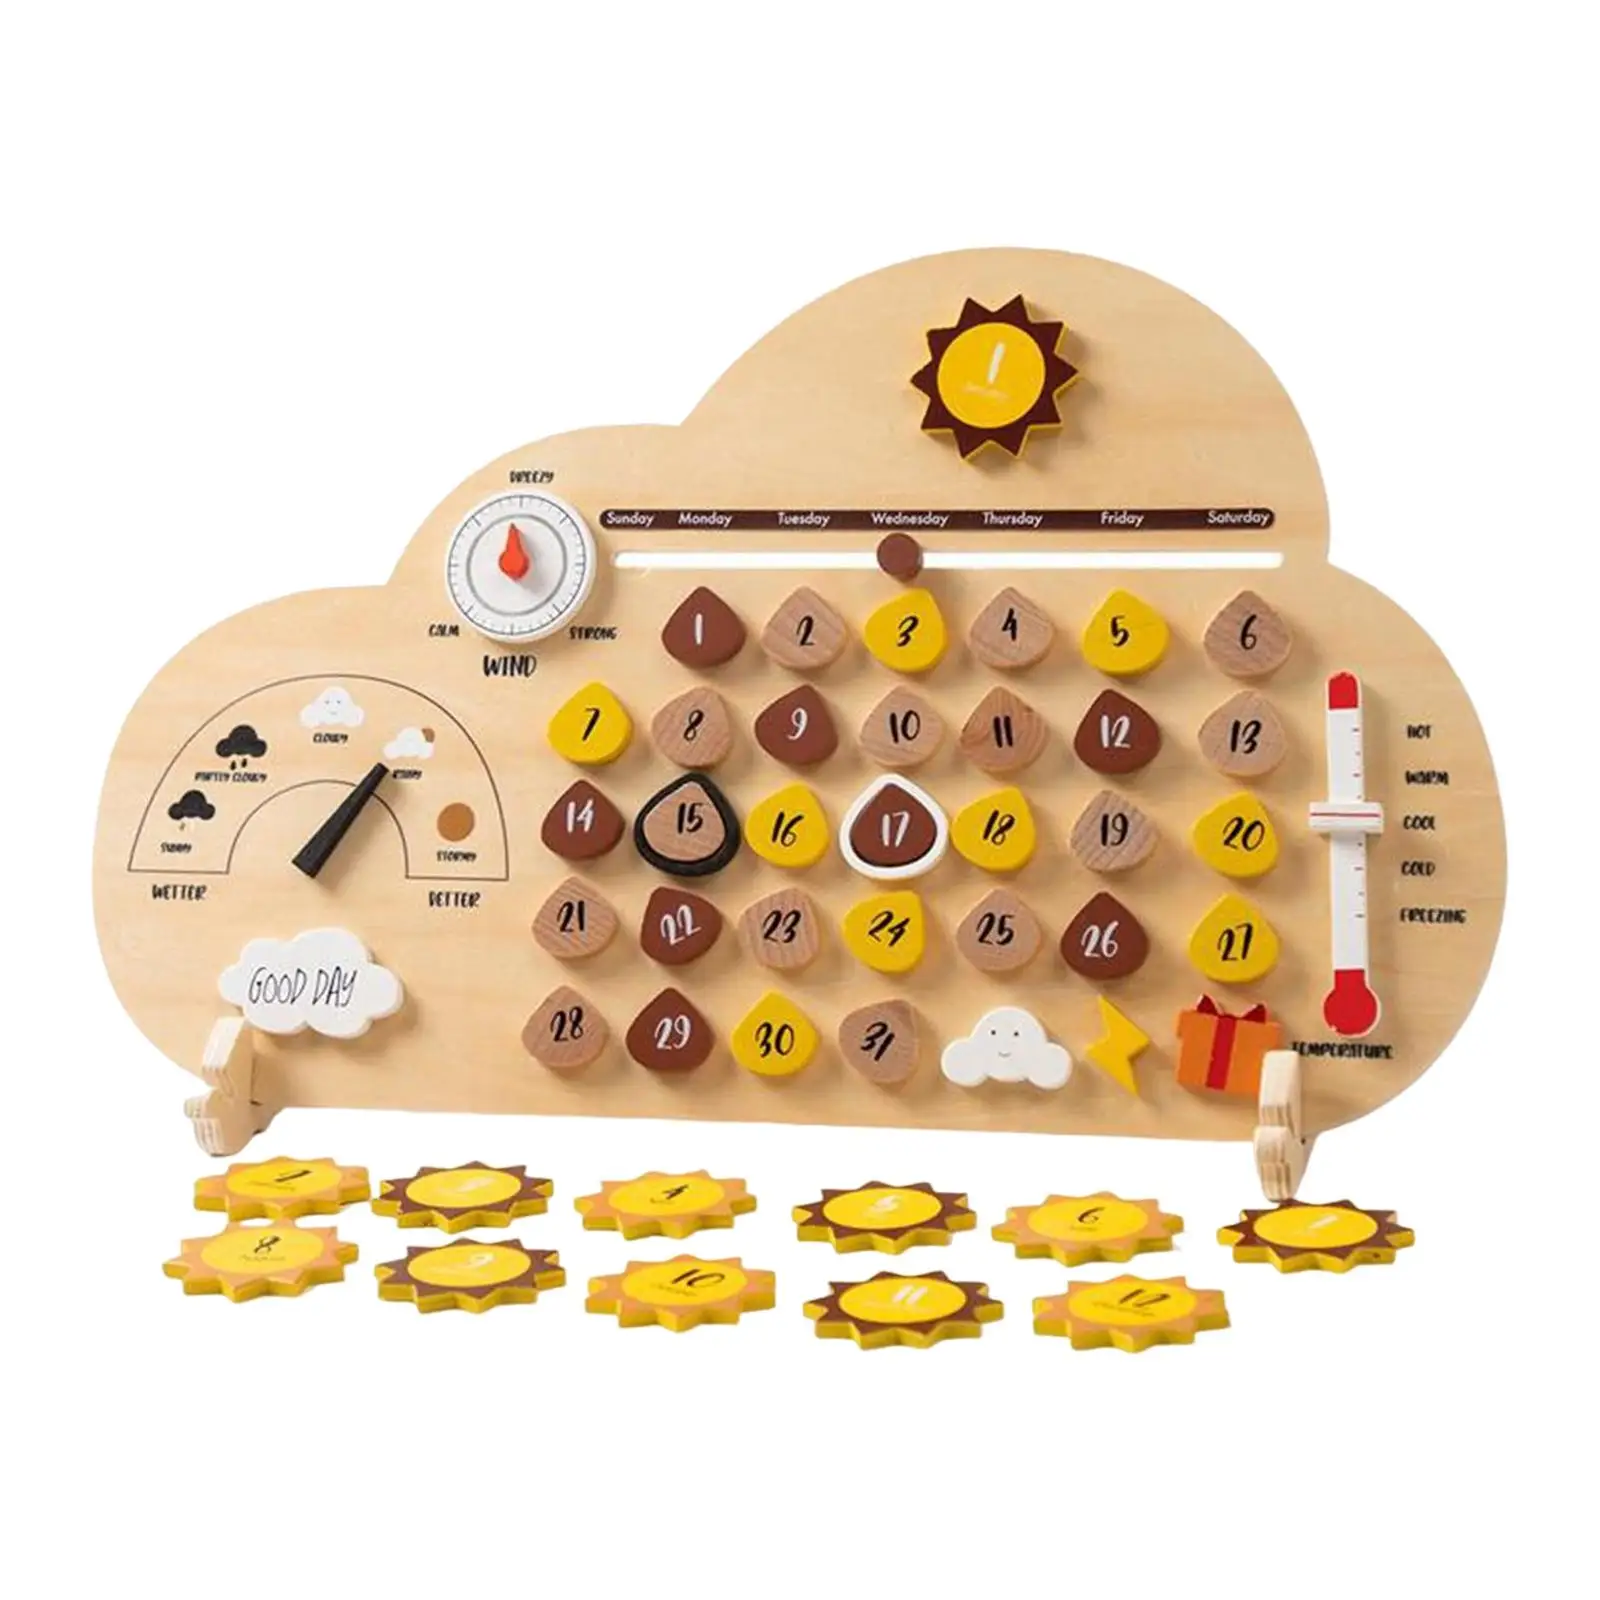 Wooden Sensory Board Preschool Travel Toy for Boys Girls Toddlers Birthday Gifts